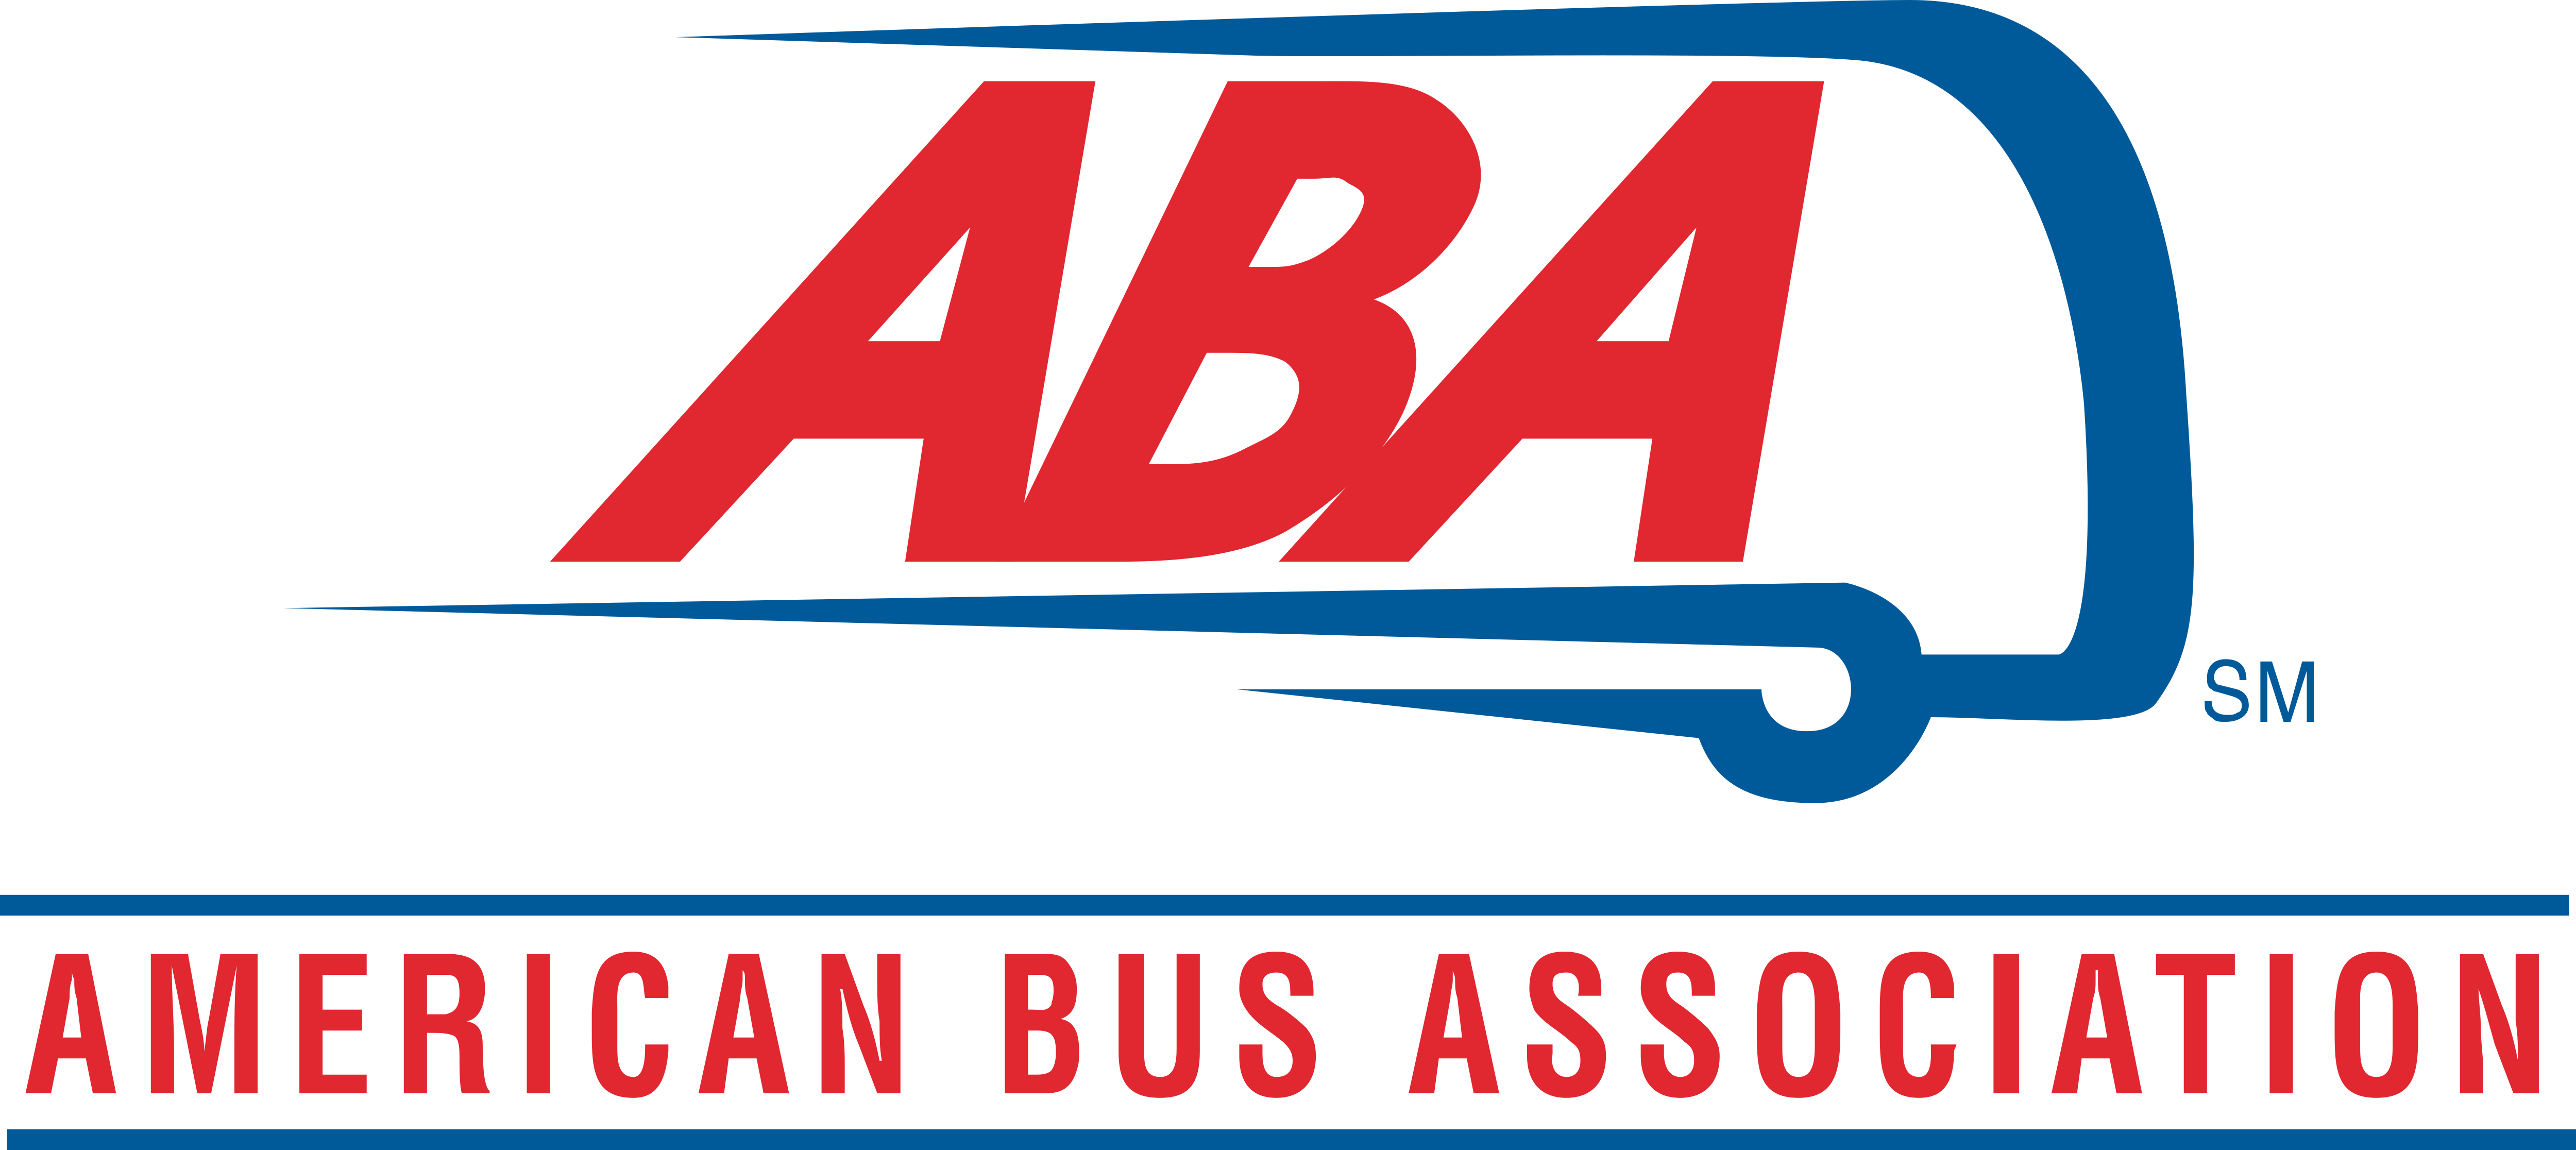 American Bus Association Logos Download